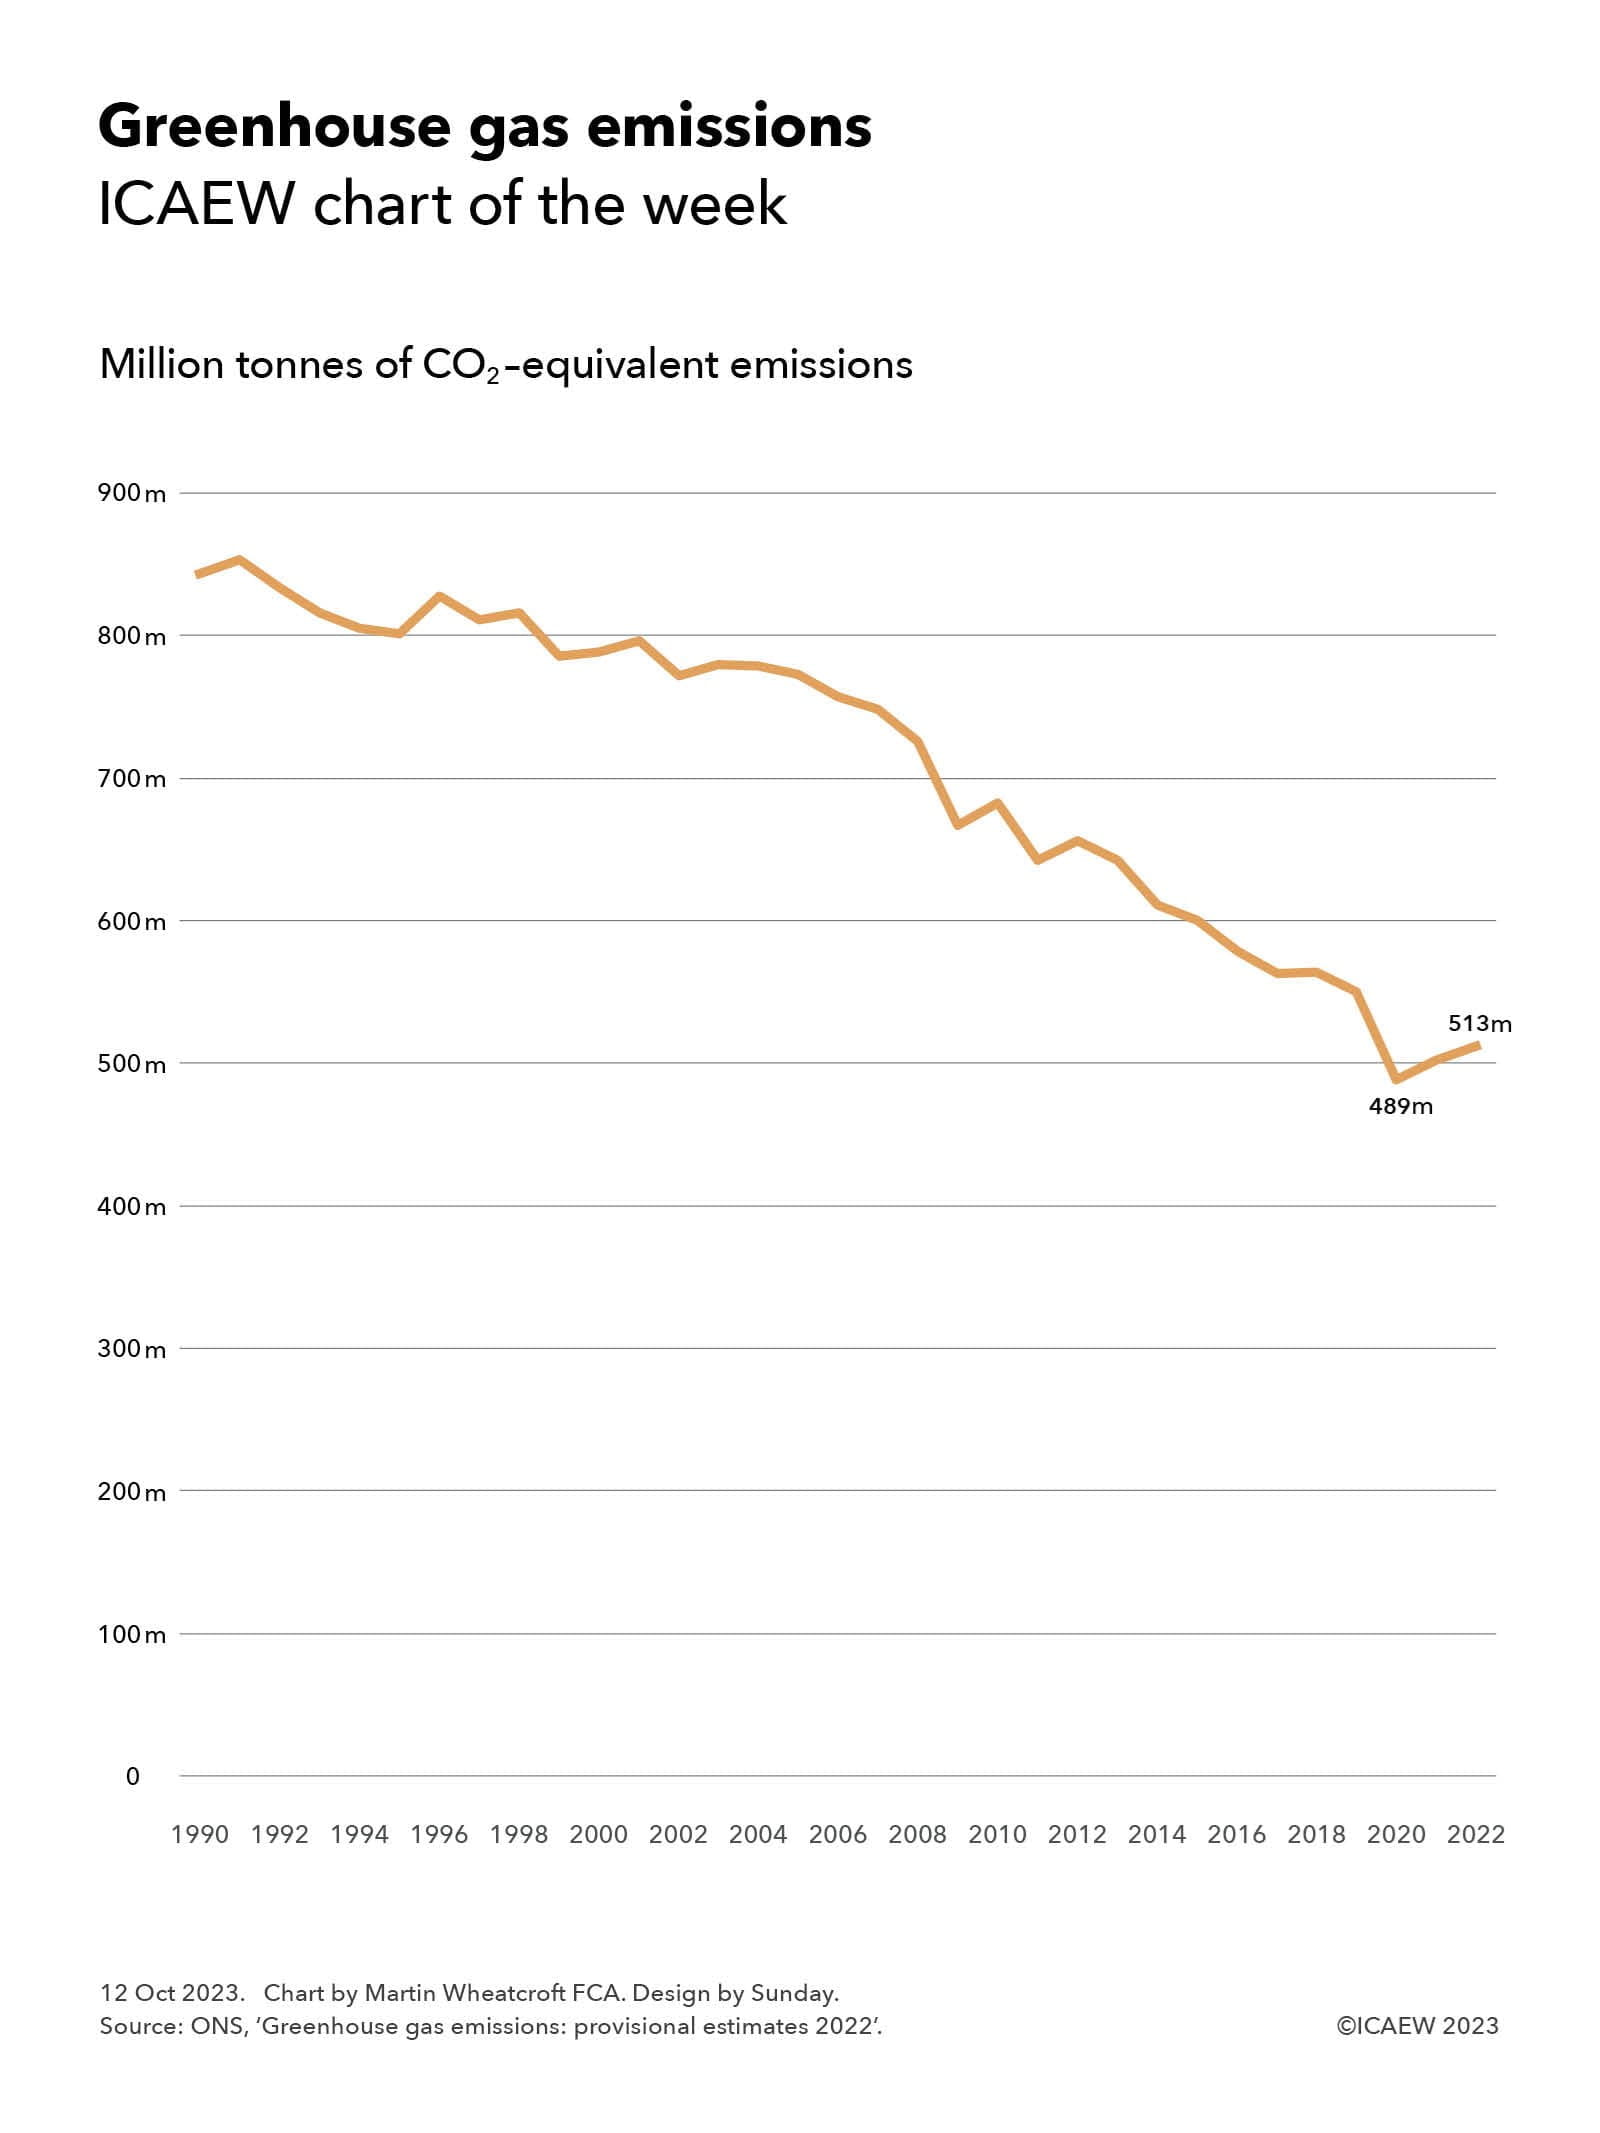 greenhouse gas graph